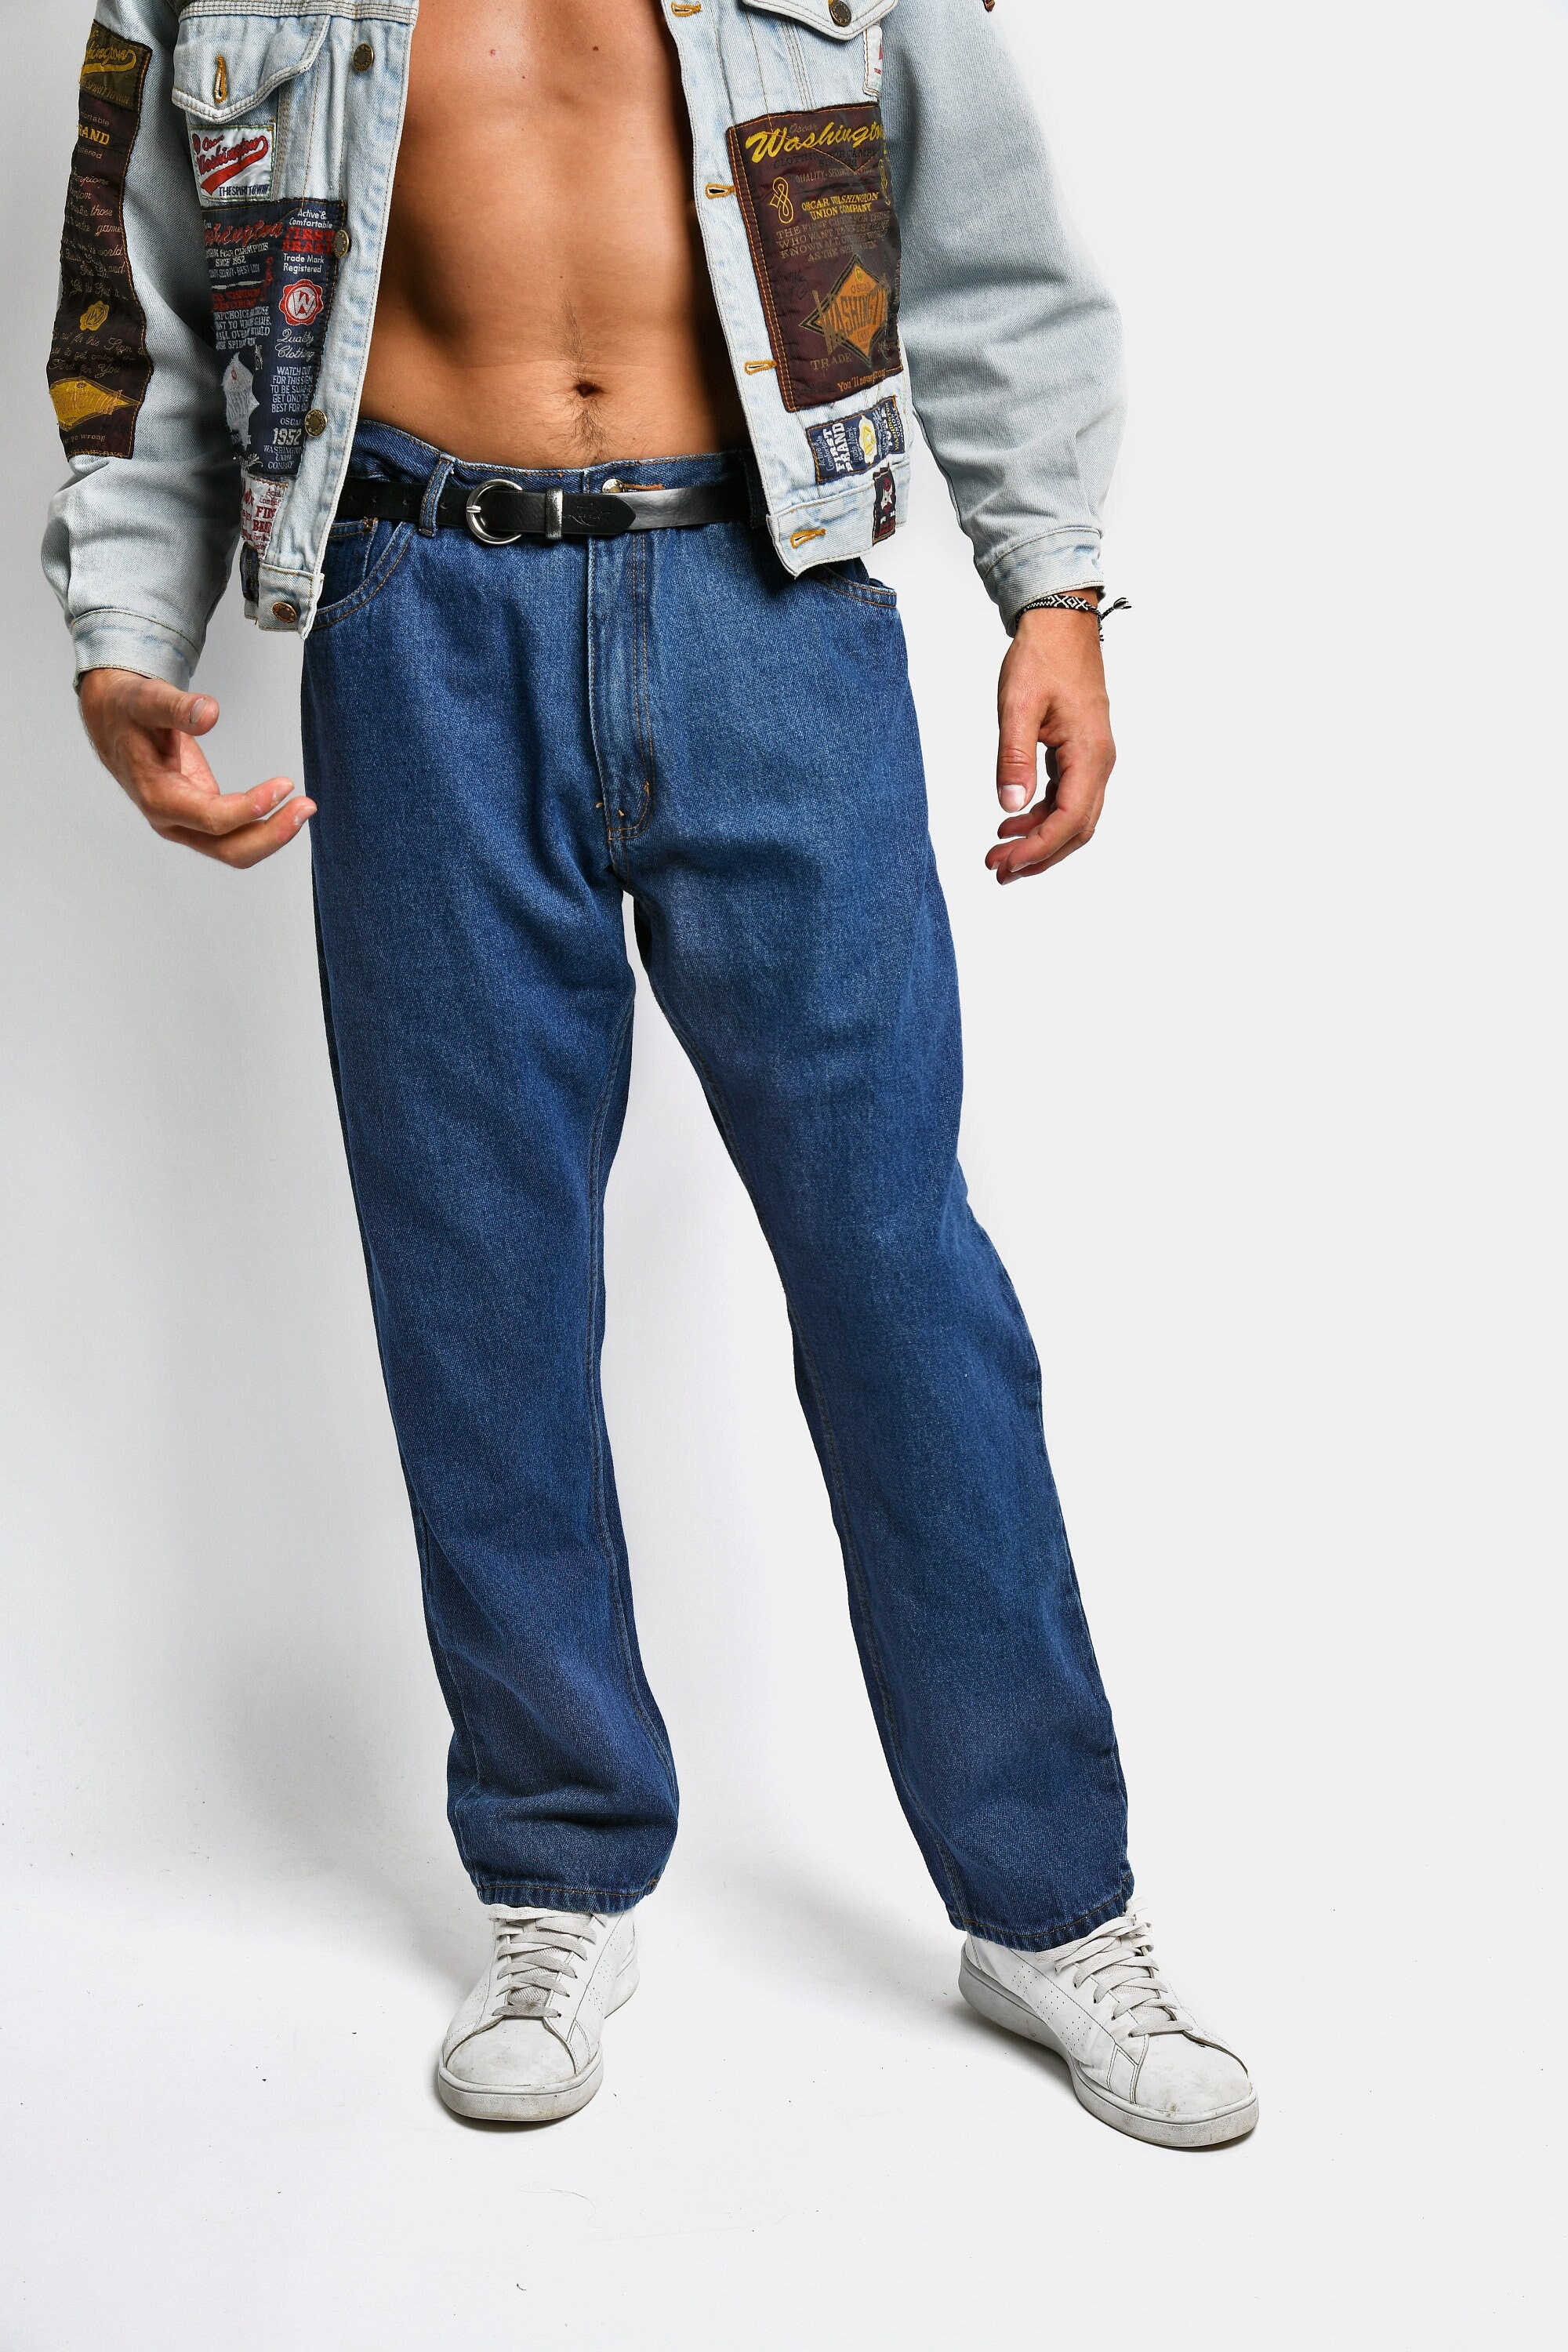 80s Blue Jeans Shirt -  Australia